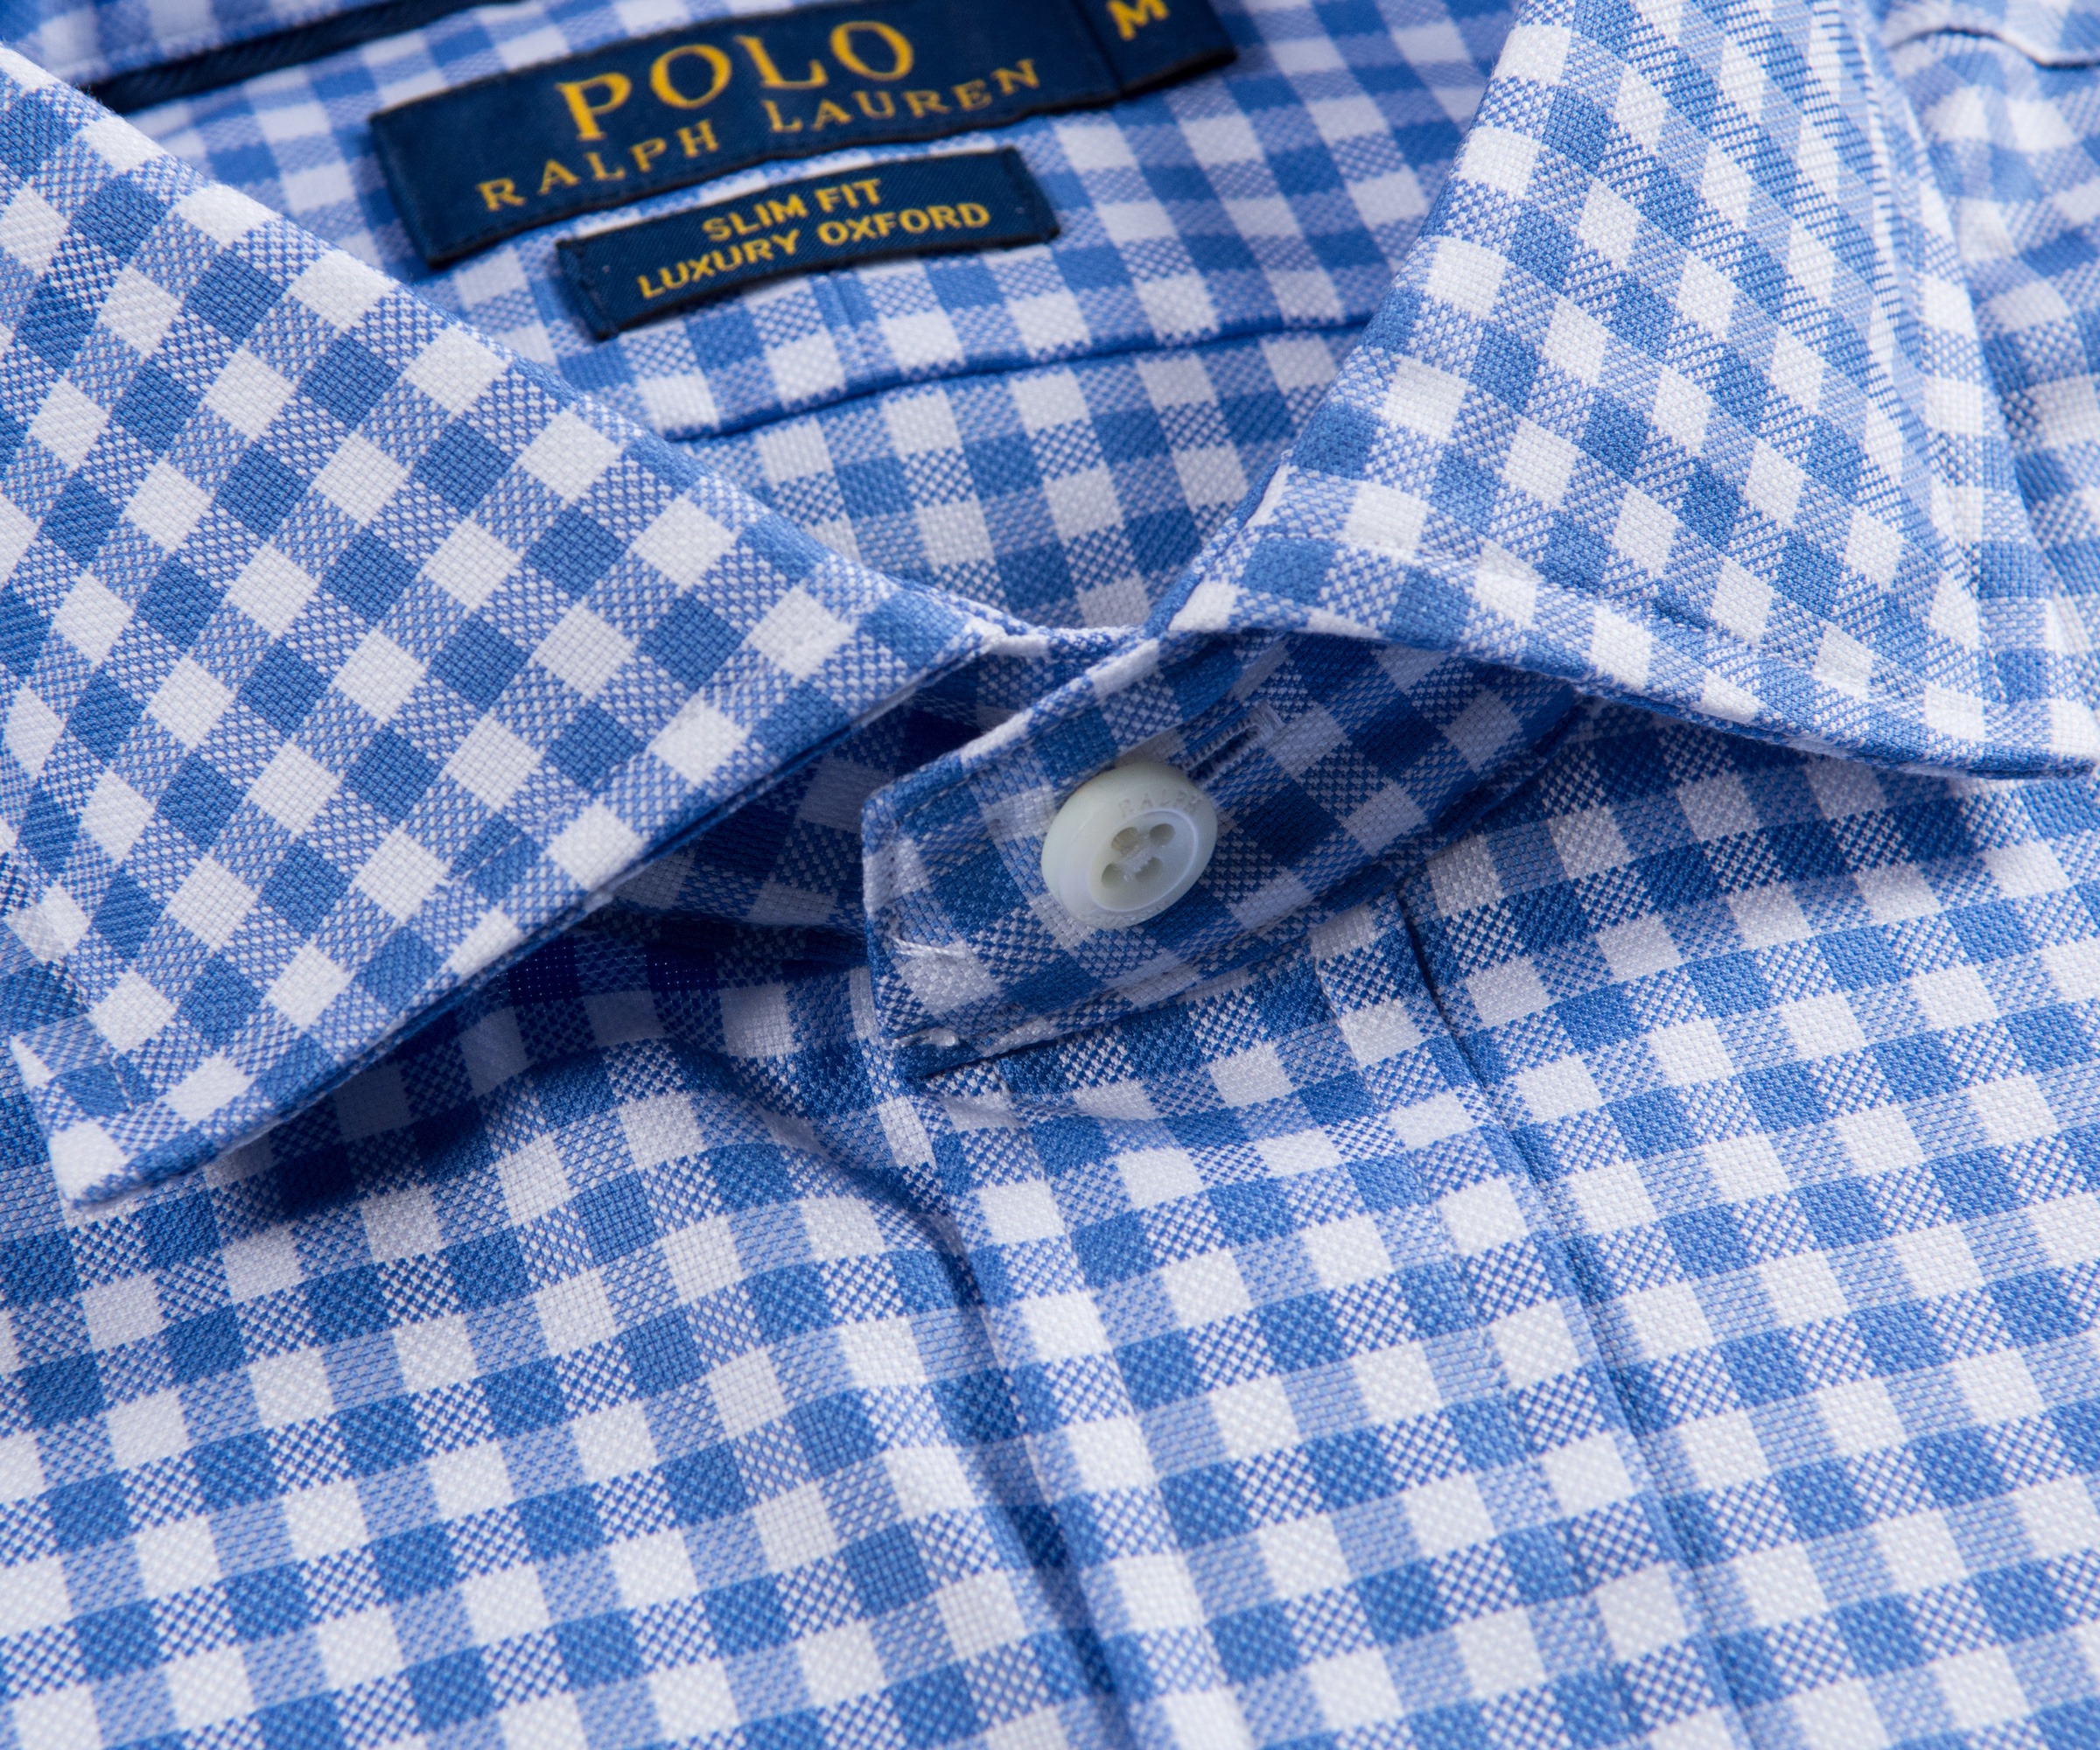 Polo Ralph Lauren Slim Fit Luxury Oxford Gingham Check Shirt Blue & White